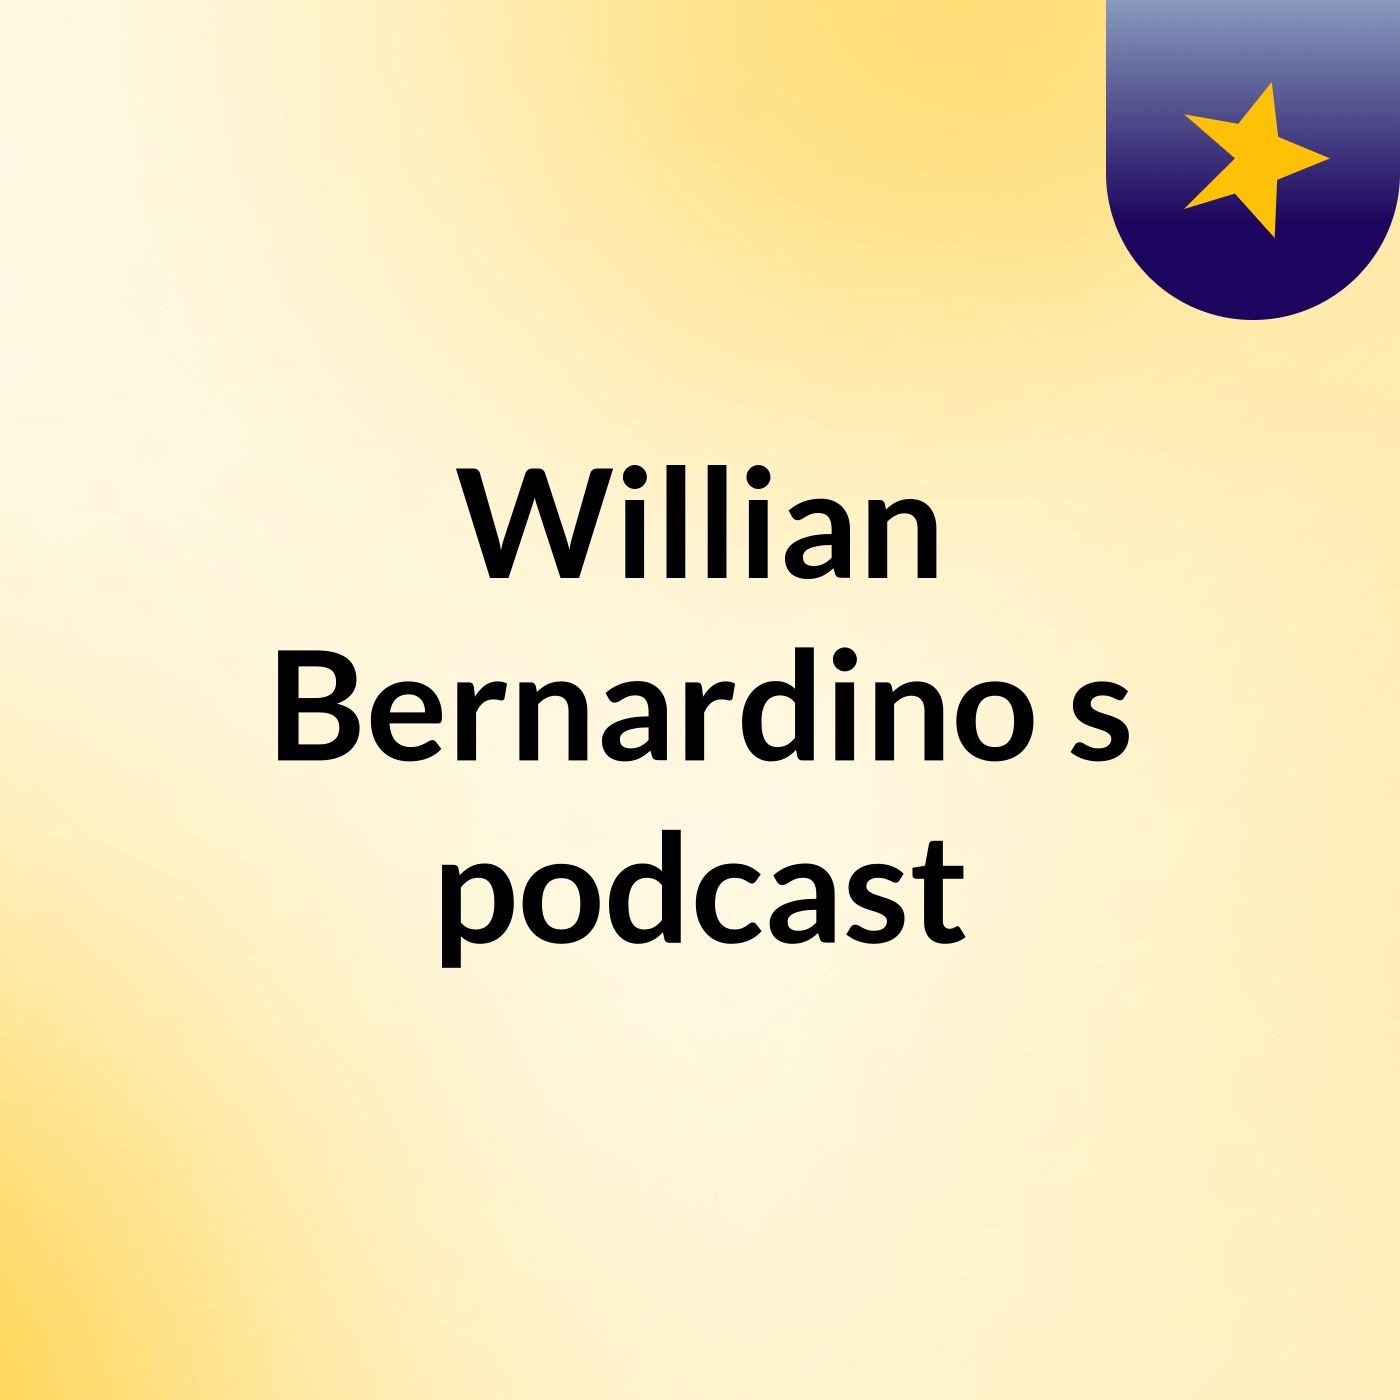 Willian Bernardino's podcast